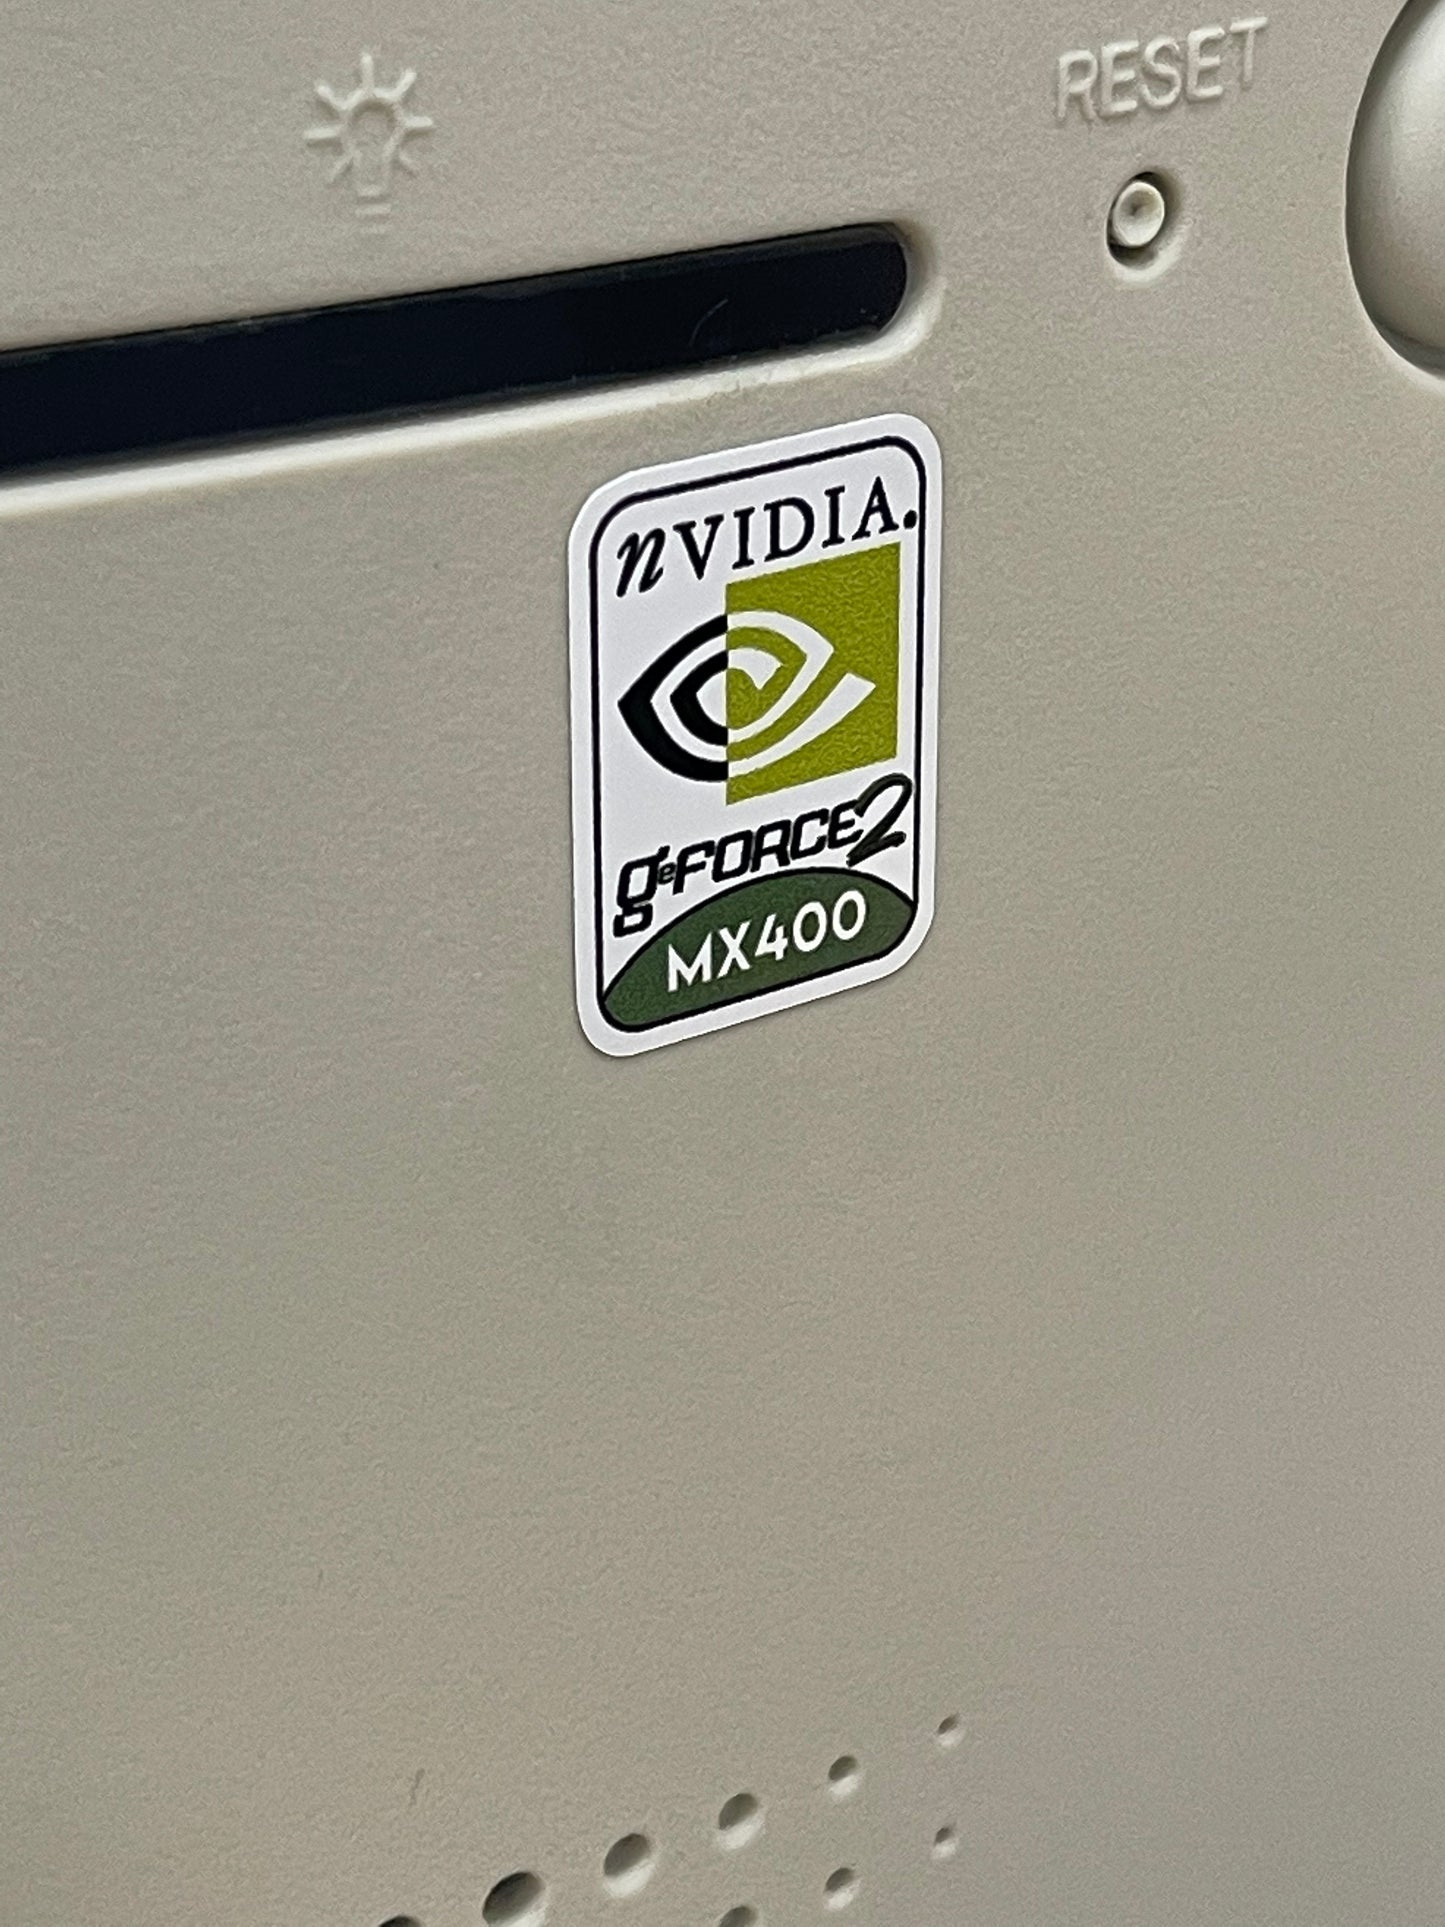 Nvidia Geforce2 MX400 Video Graphics Case Badge Sticker - White